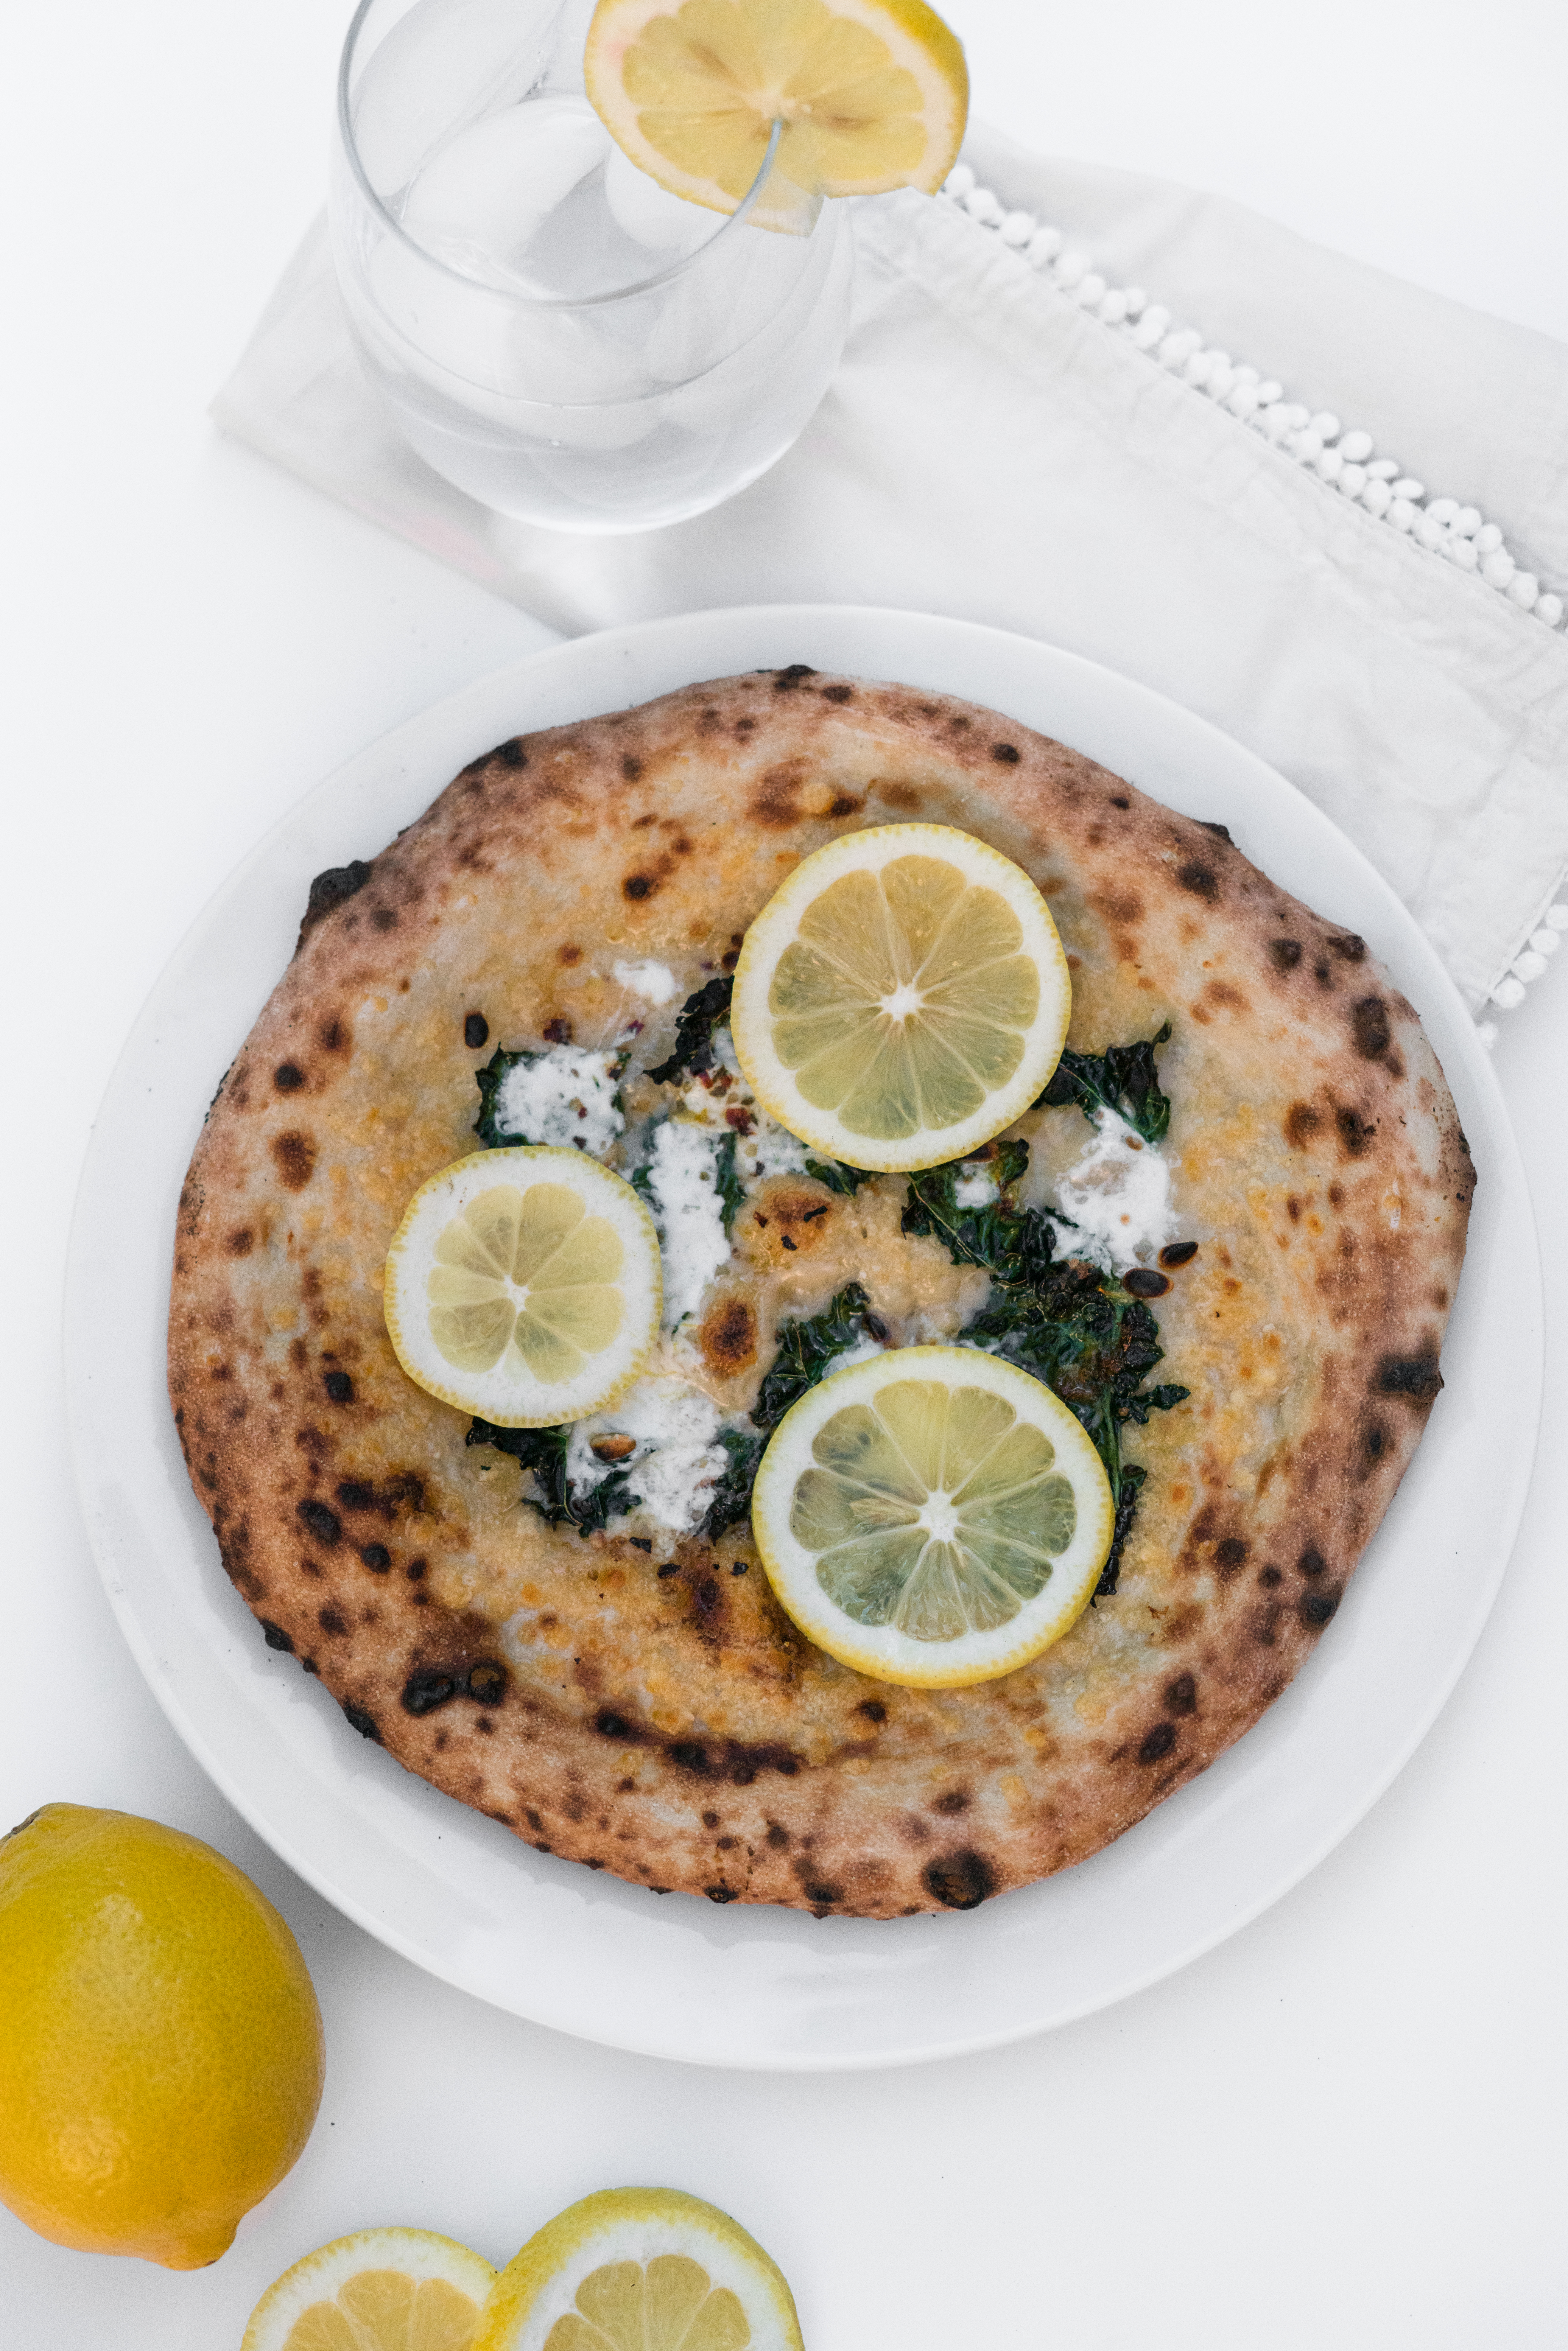 Kale lemon pizza on white table cloth